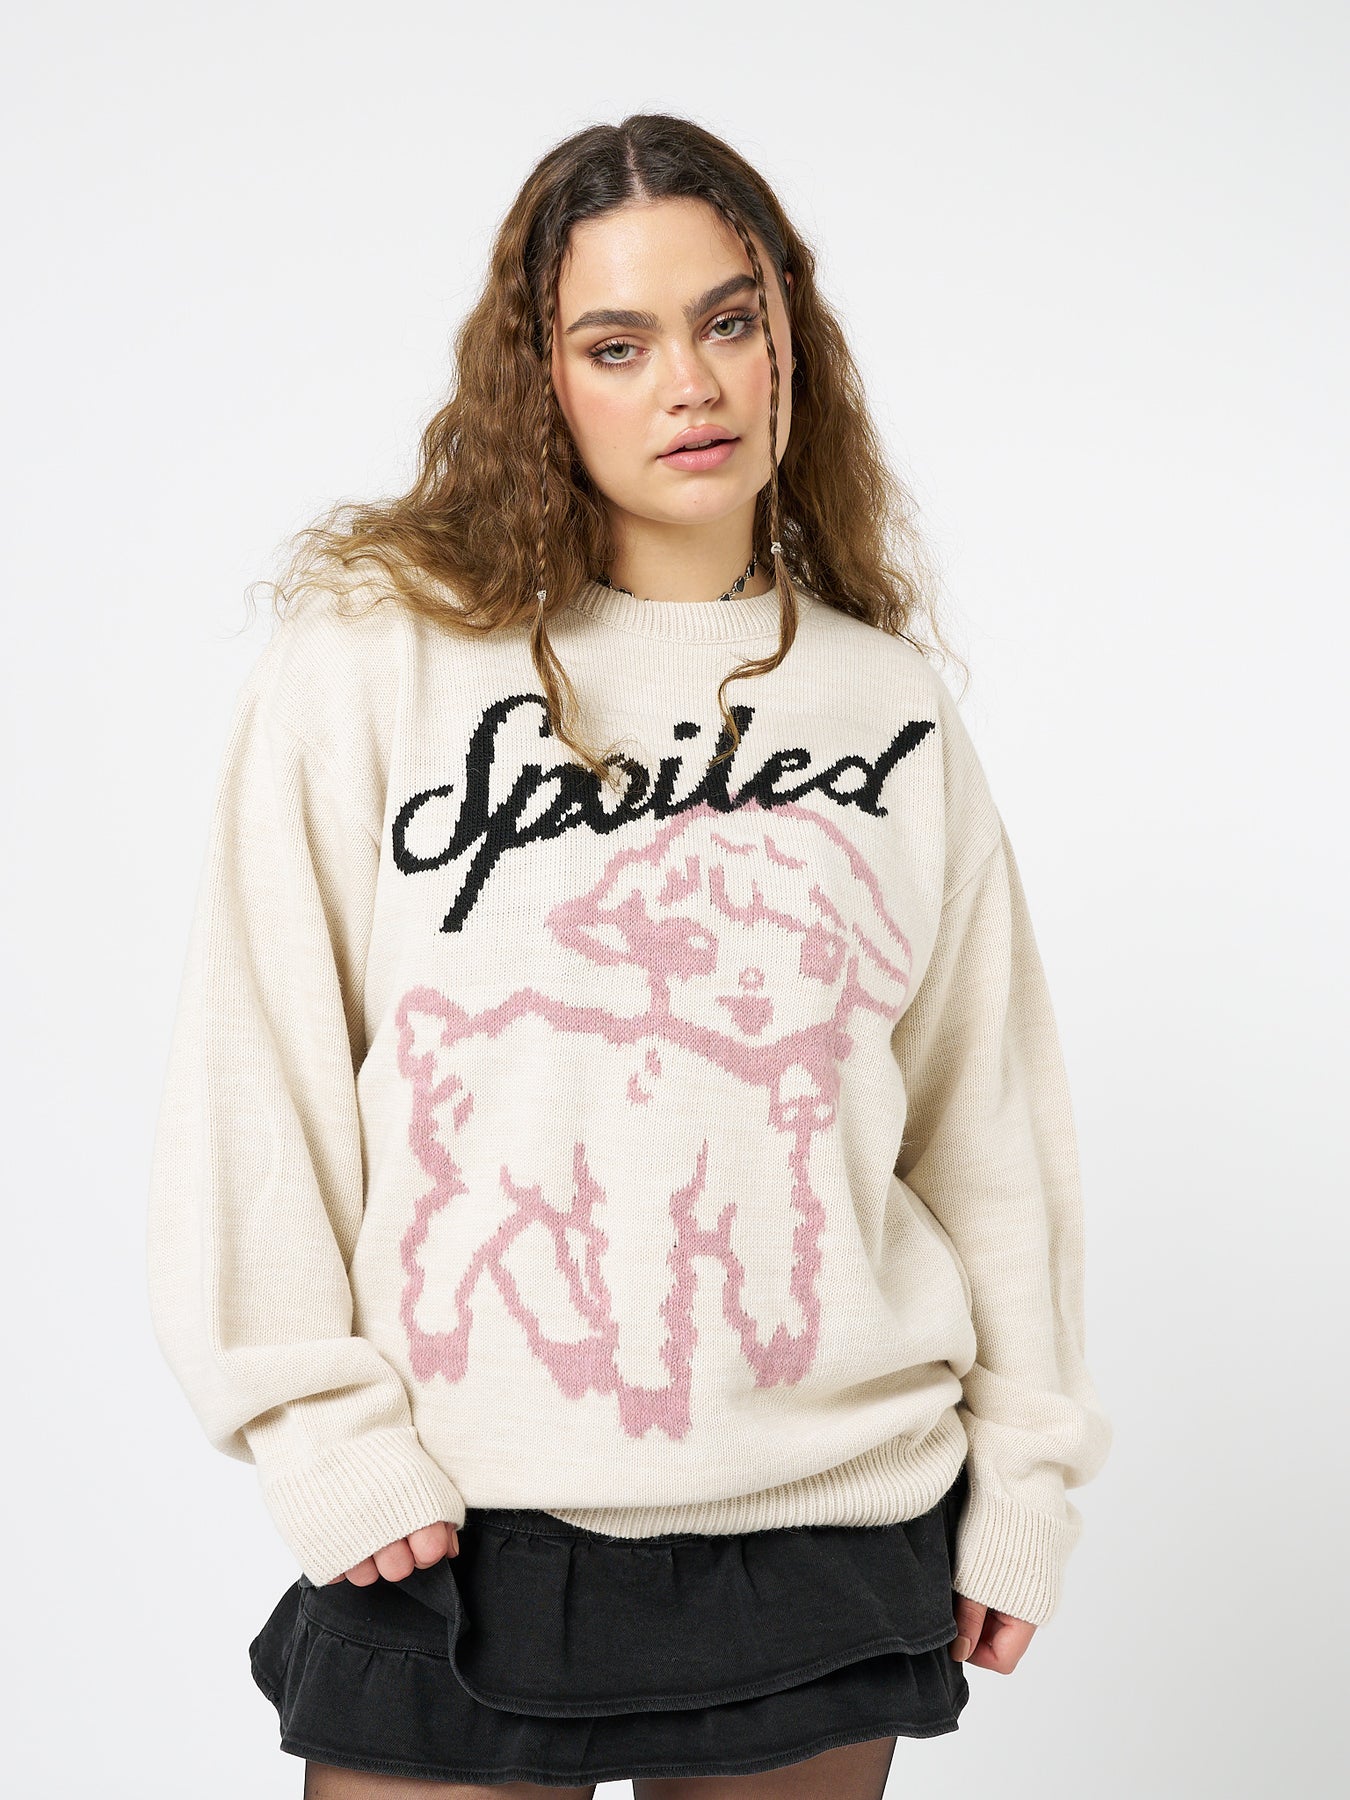 Spoiled Sheep Graphic Knitted Sweater | Minga London